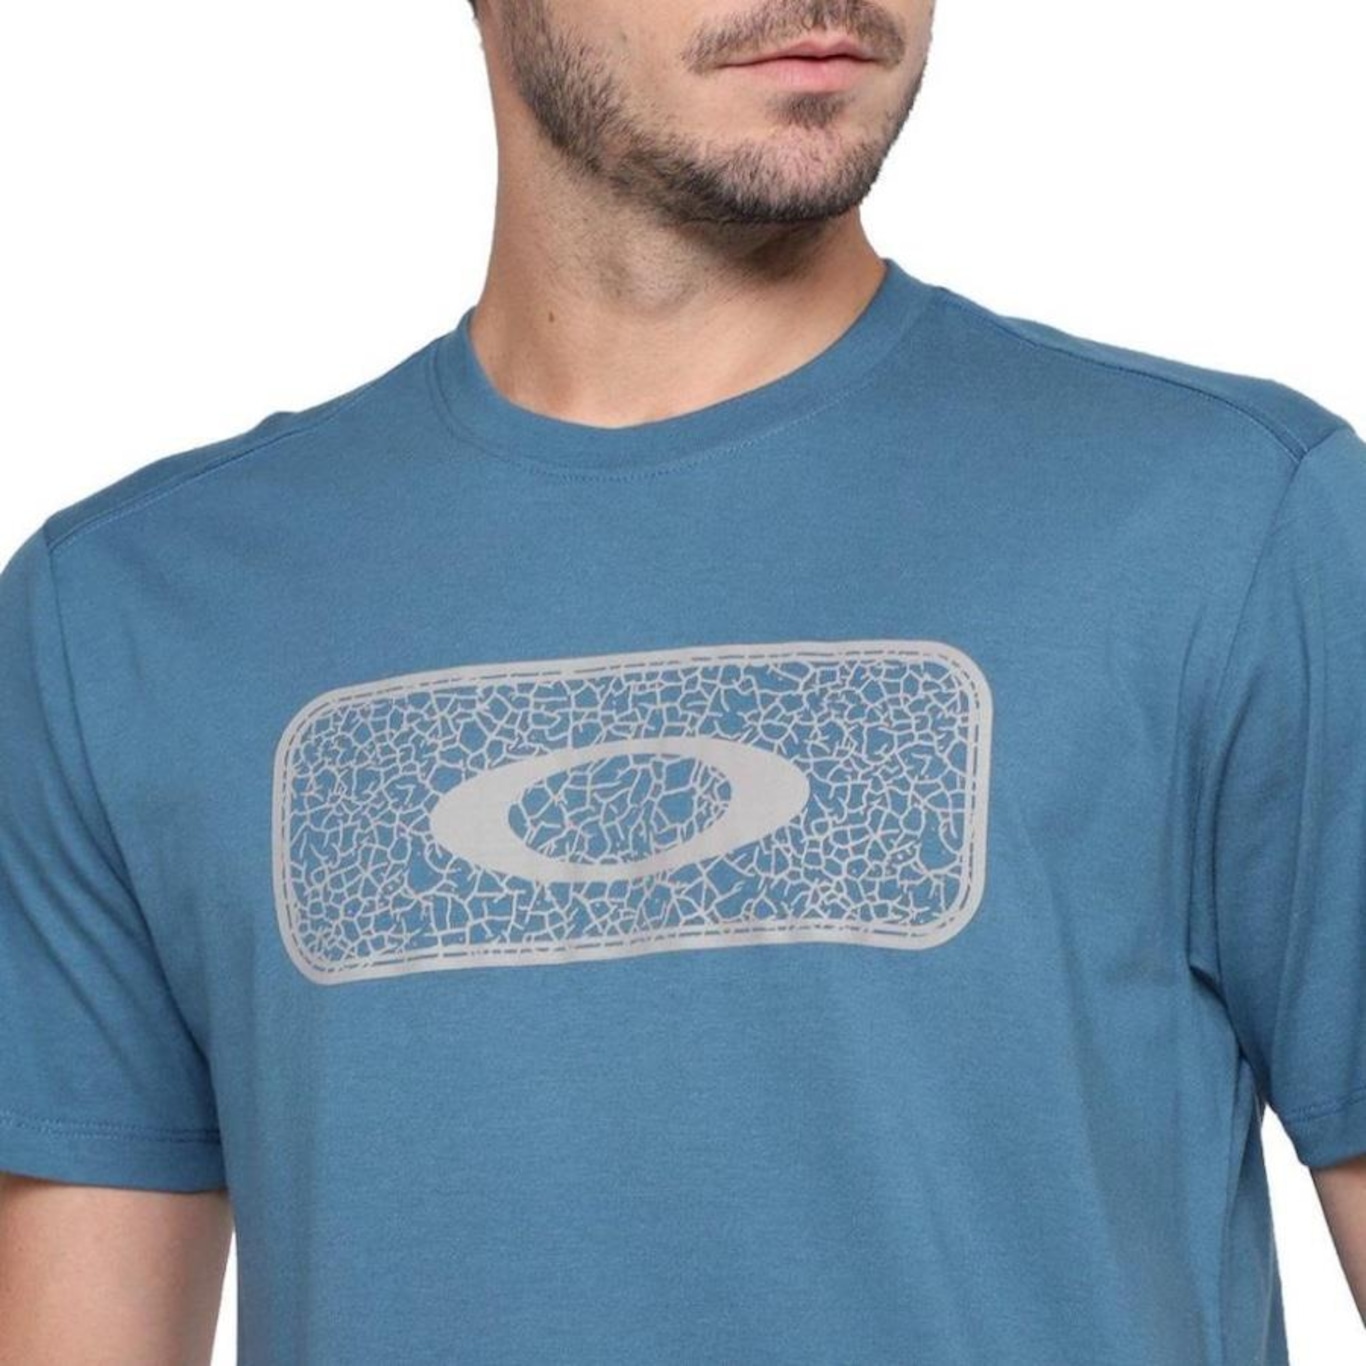 Camiseta Oakley Texture Graphic Tee White - Masculina